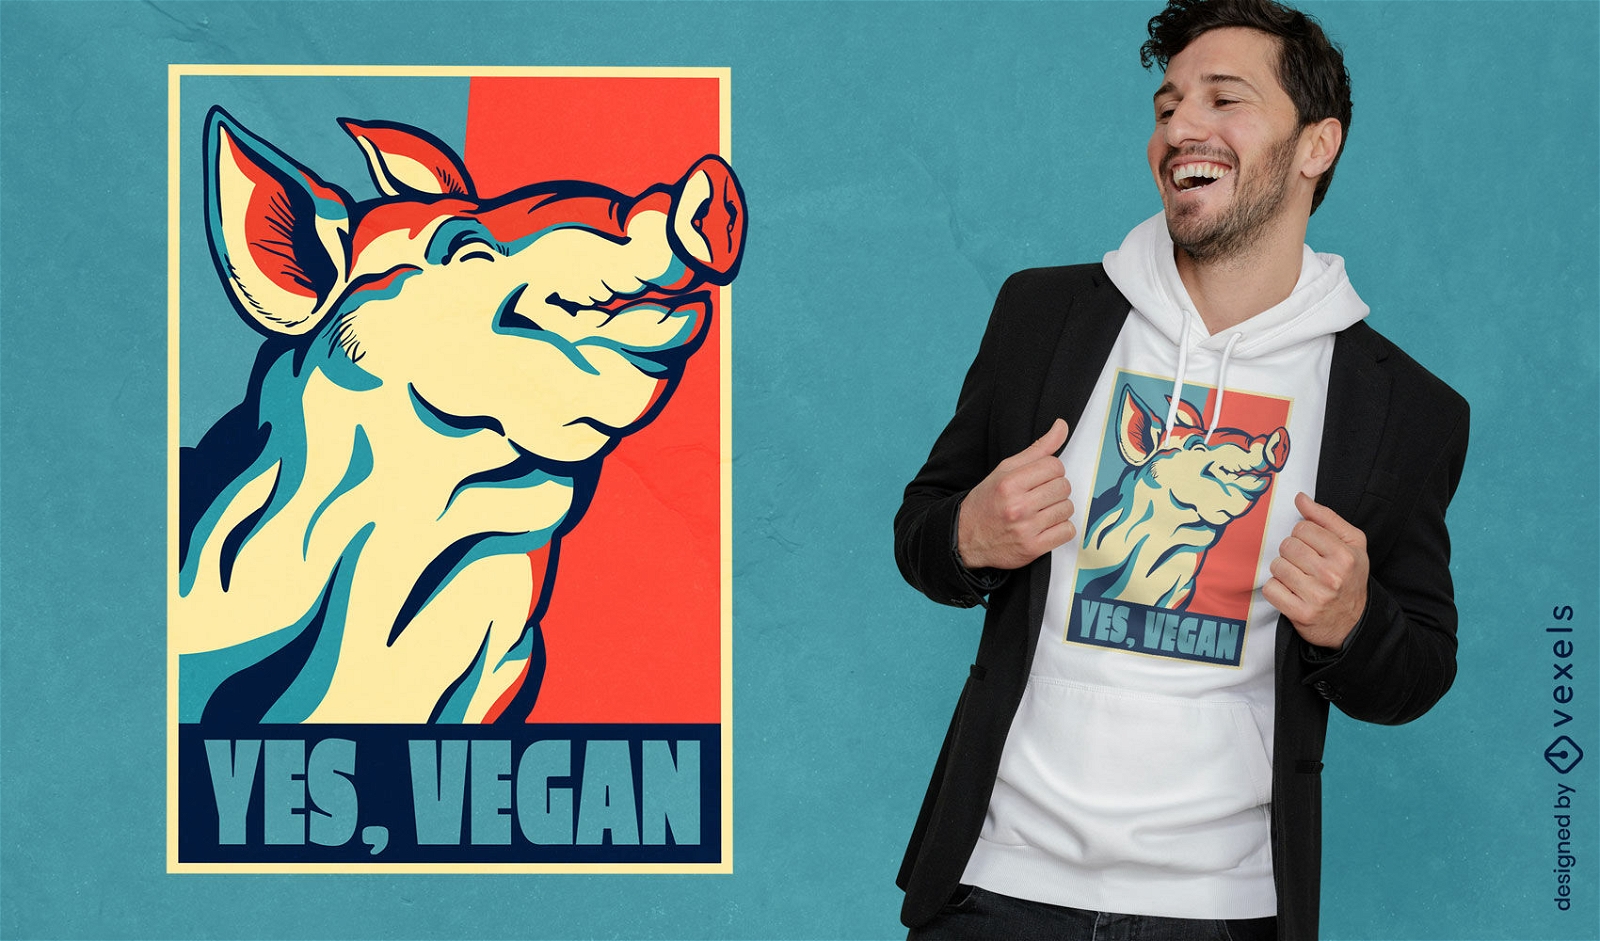 Pig vegan flyer t-shirt design